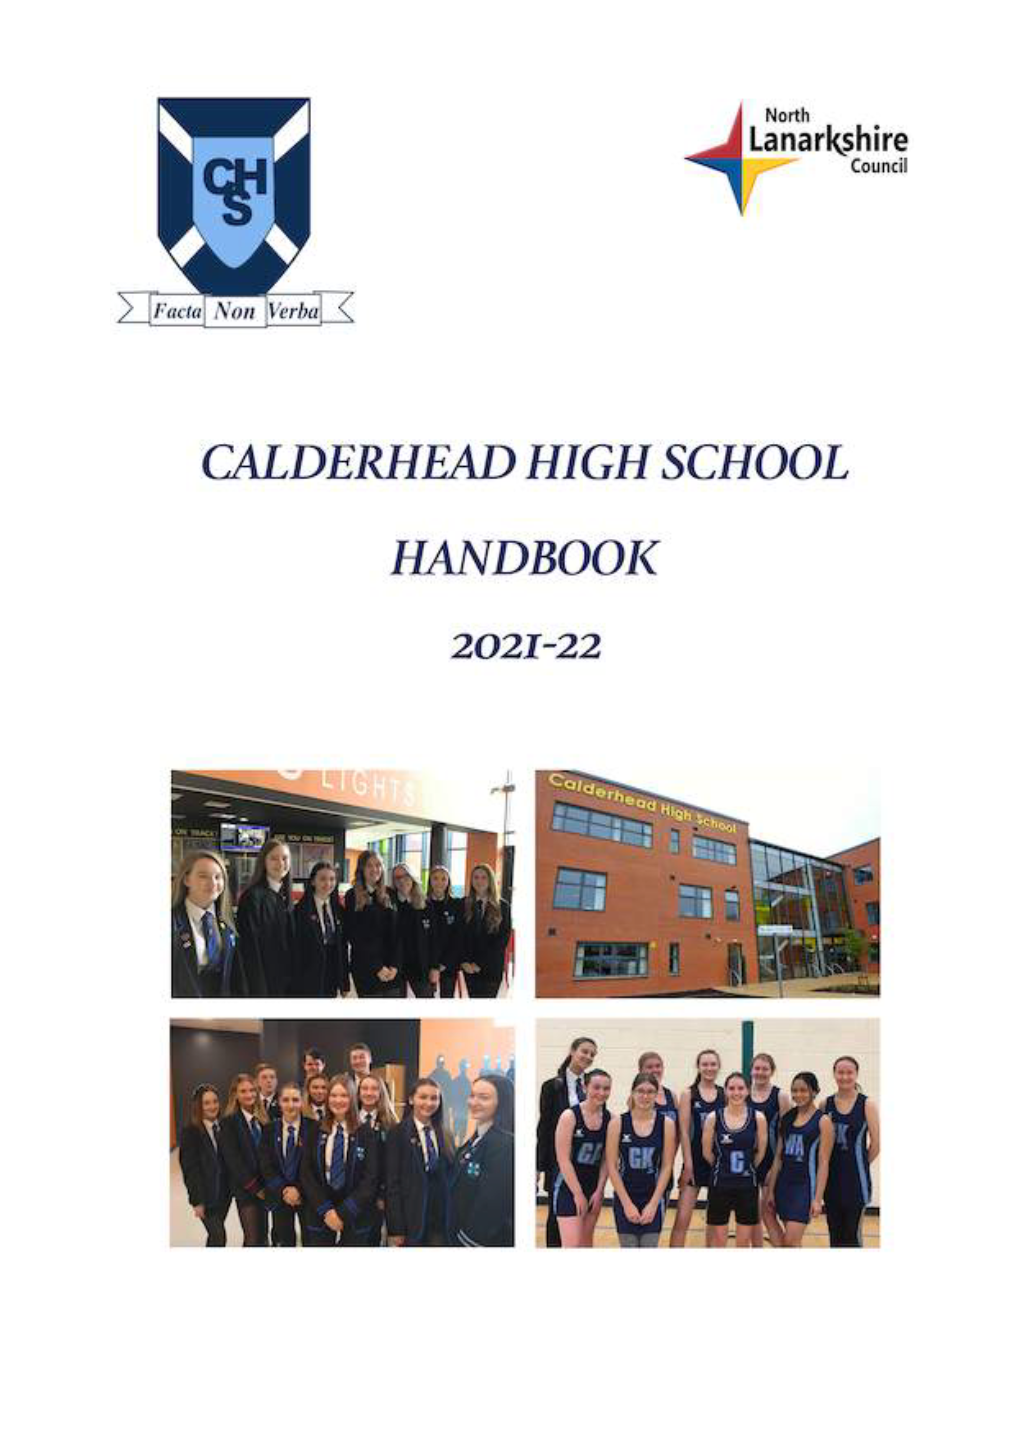 Calderhead High School Handbook 2021/22